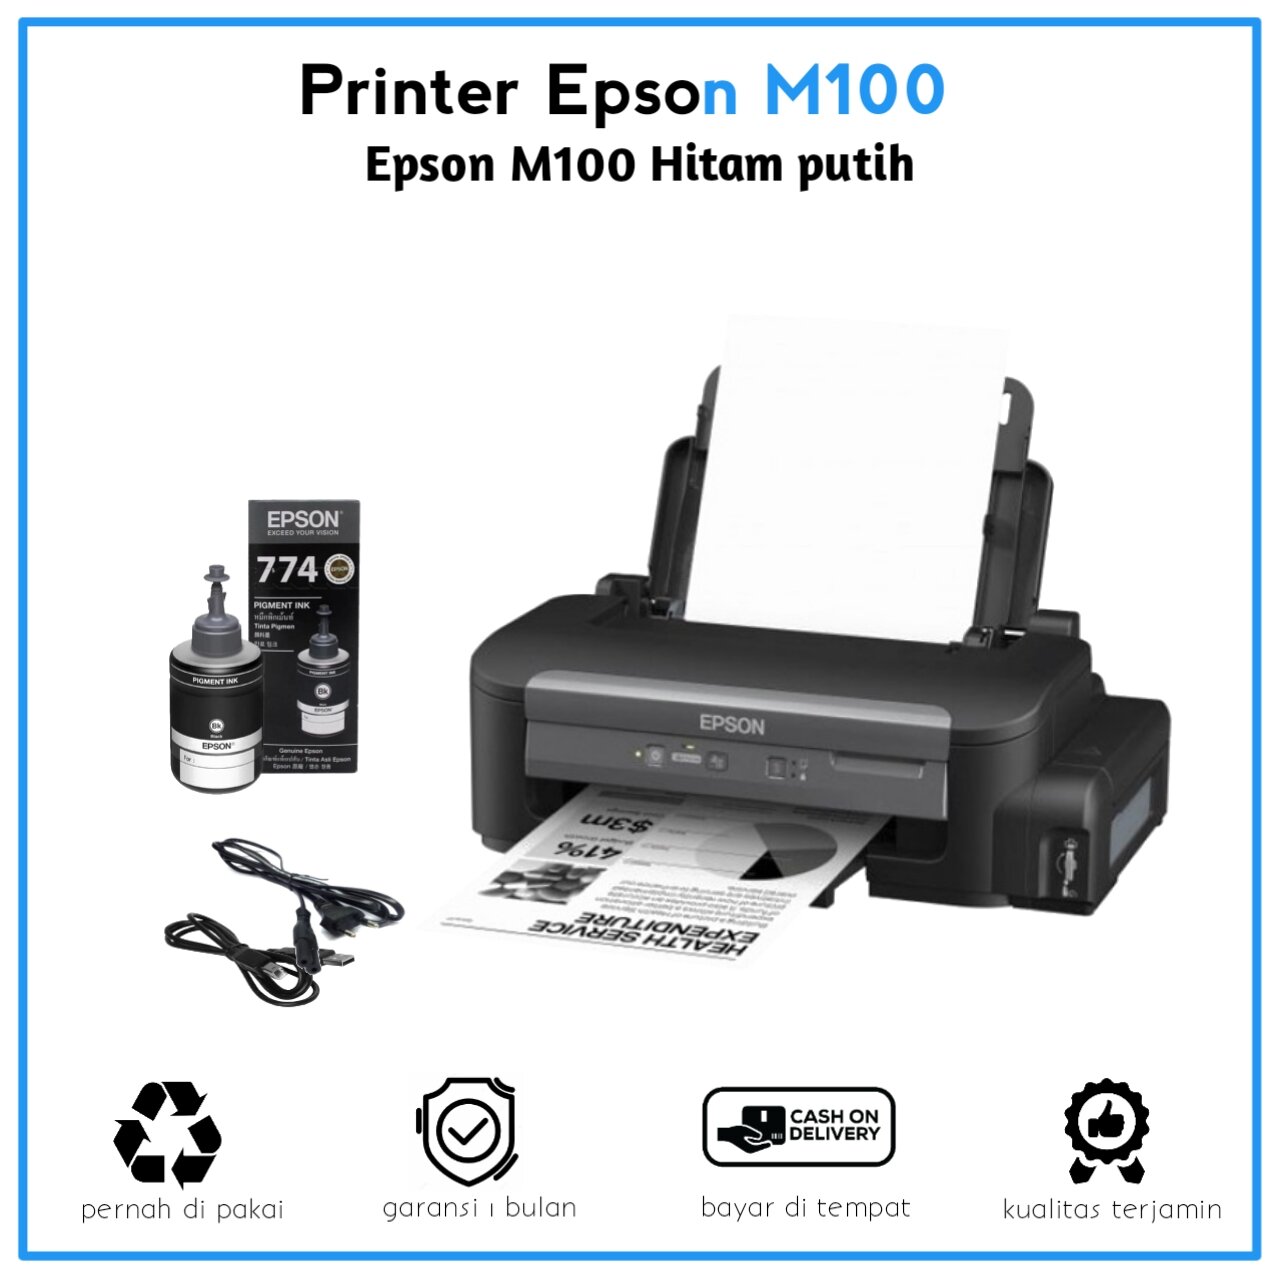 Printer Epson M100 Printer Cetak Hitam Putih Lazada Indonesia 3832